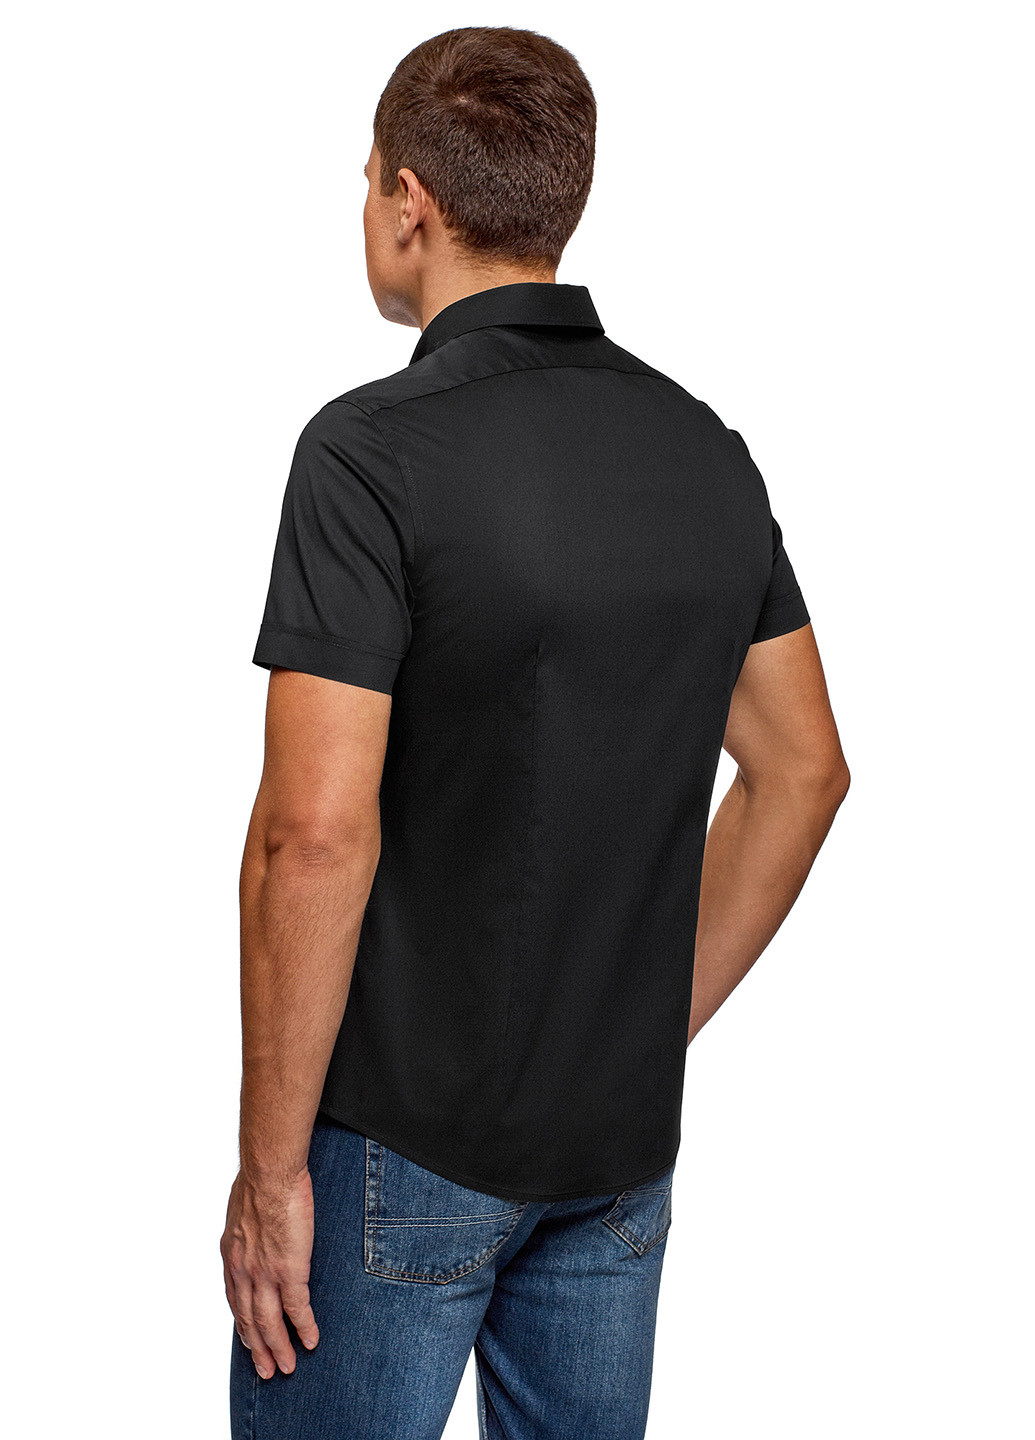 Черная кэжуал рубашка однотонная Oodji с коротким рукавом